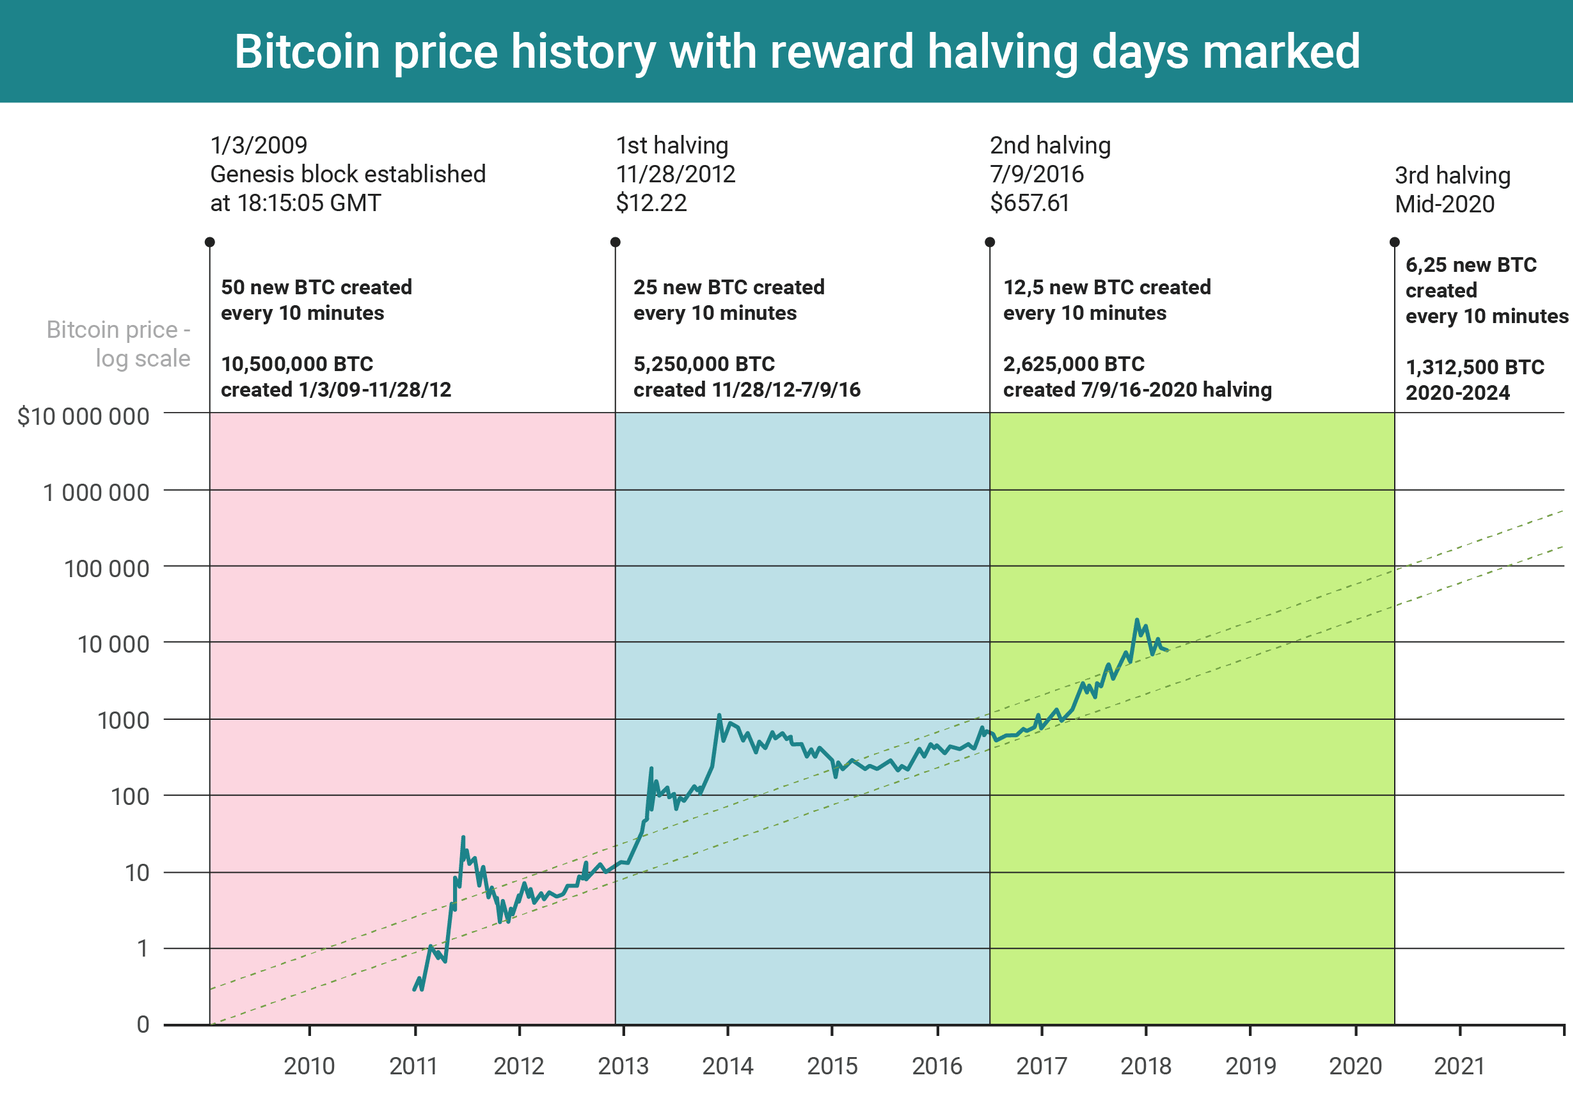 Bitcoin-Halving-Countdown